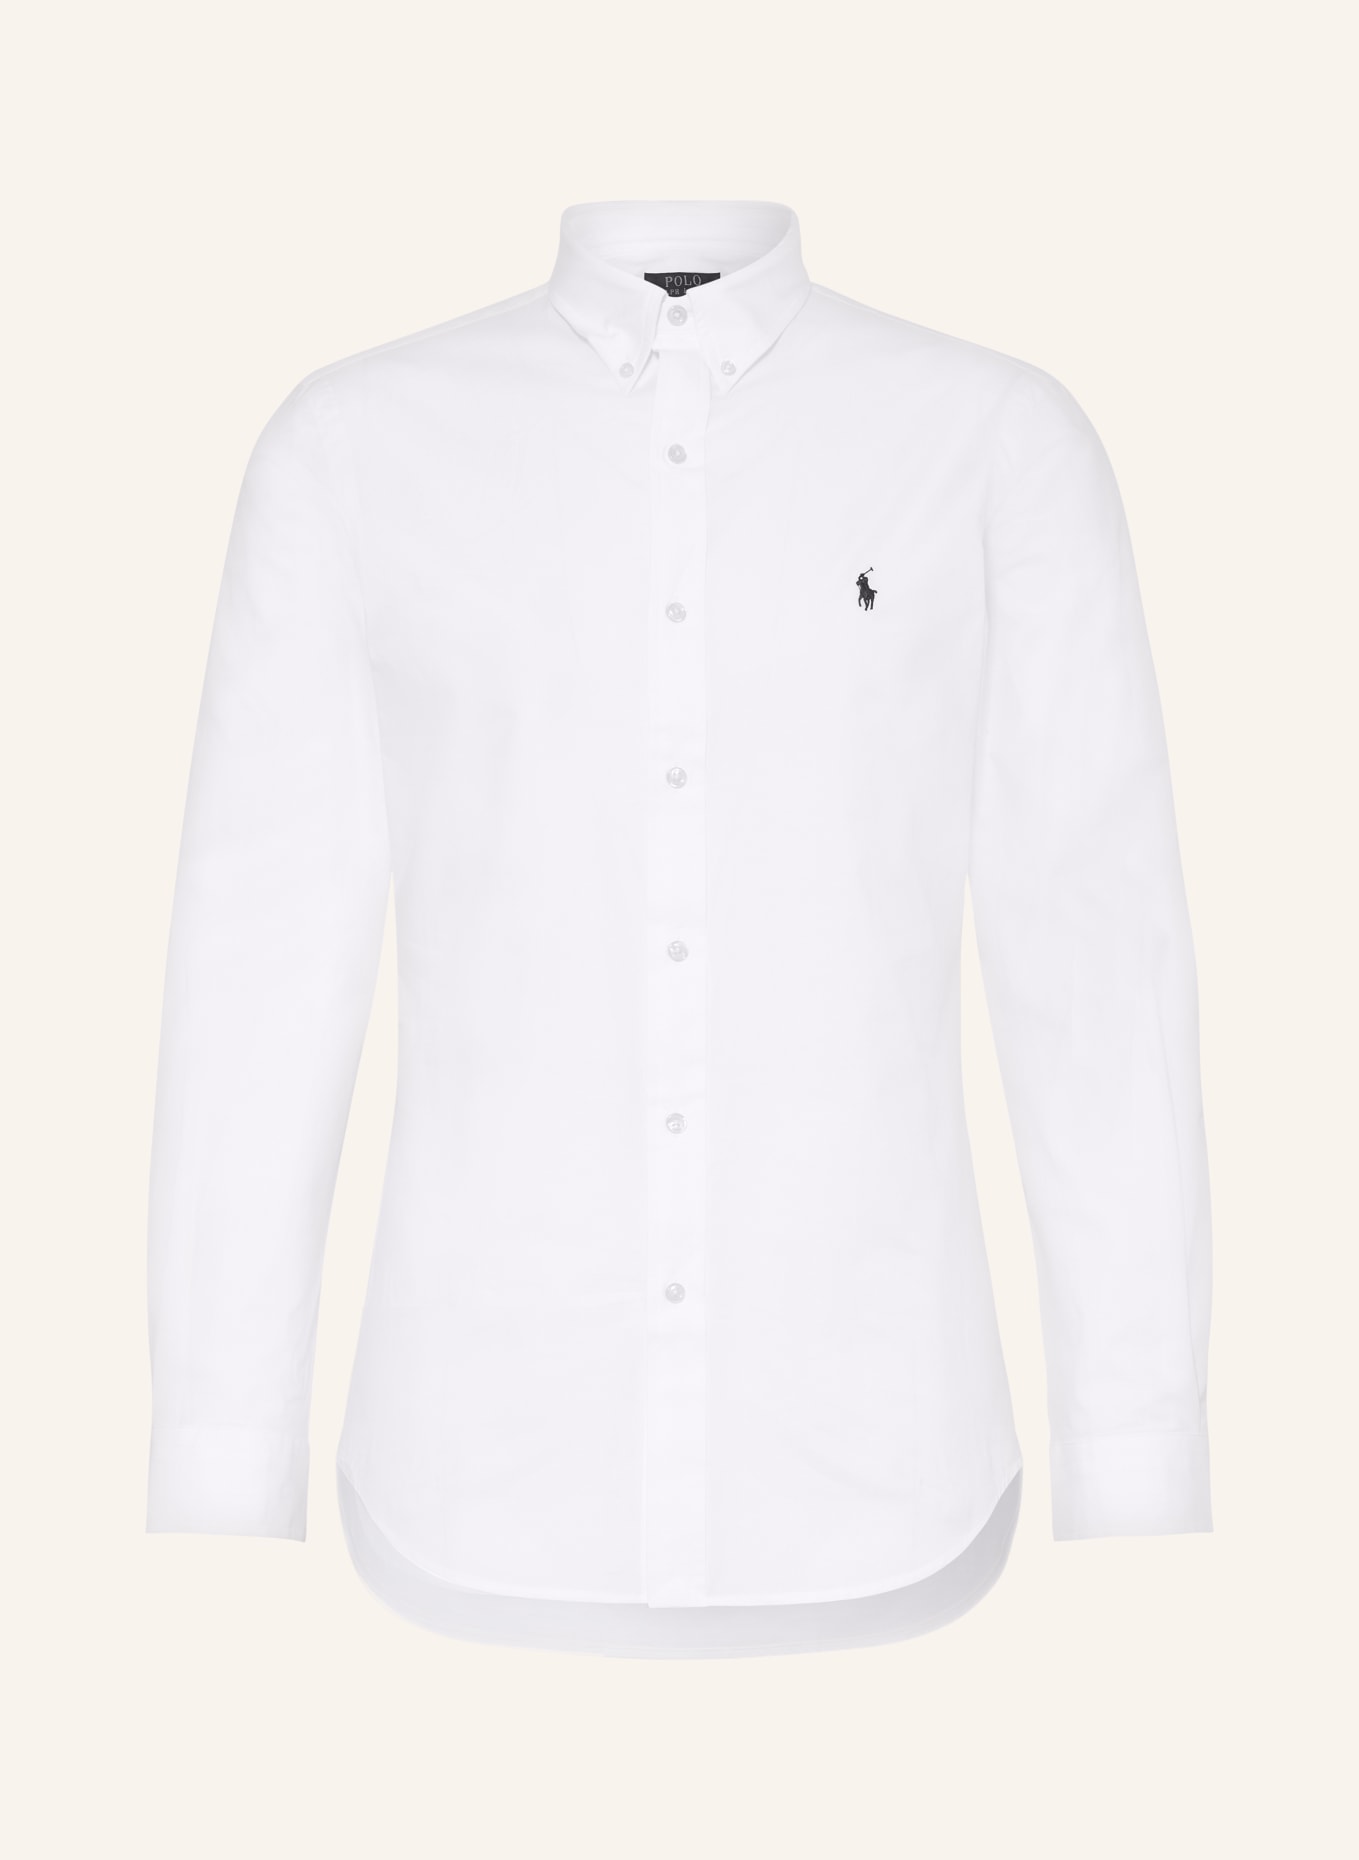 POLO RALPH LAUREN Hemd Slim Fit, Farbe: WEISS (Bild 1)